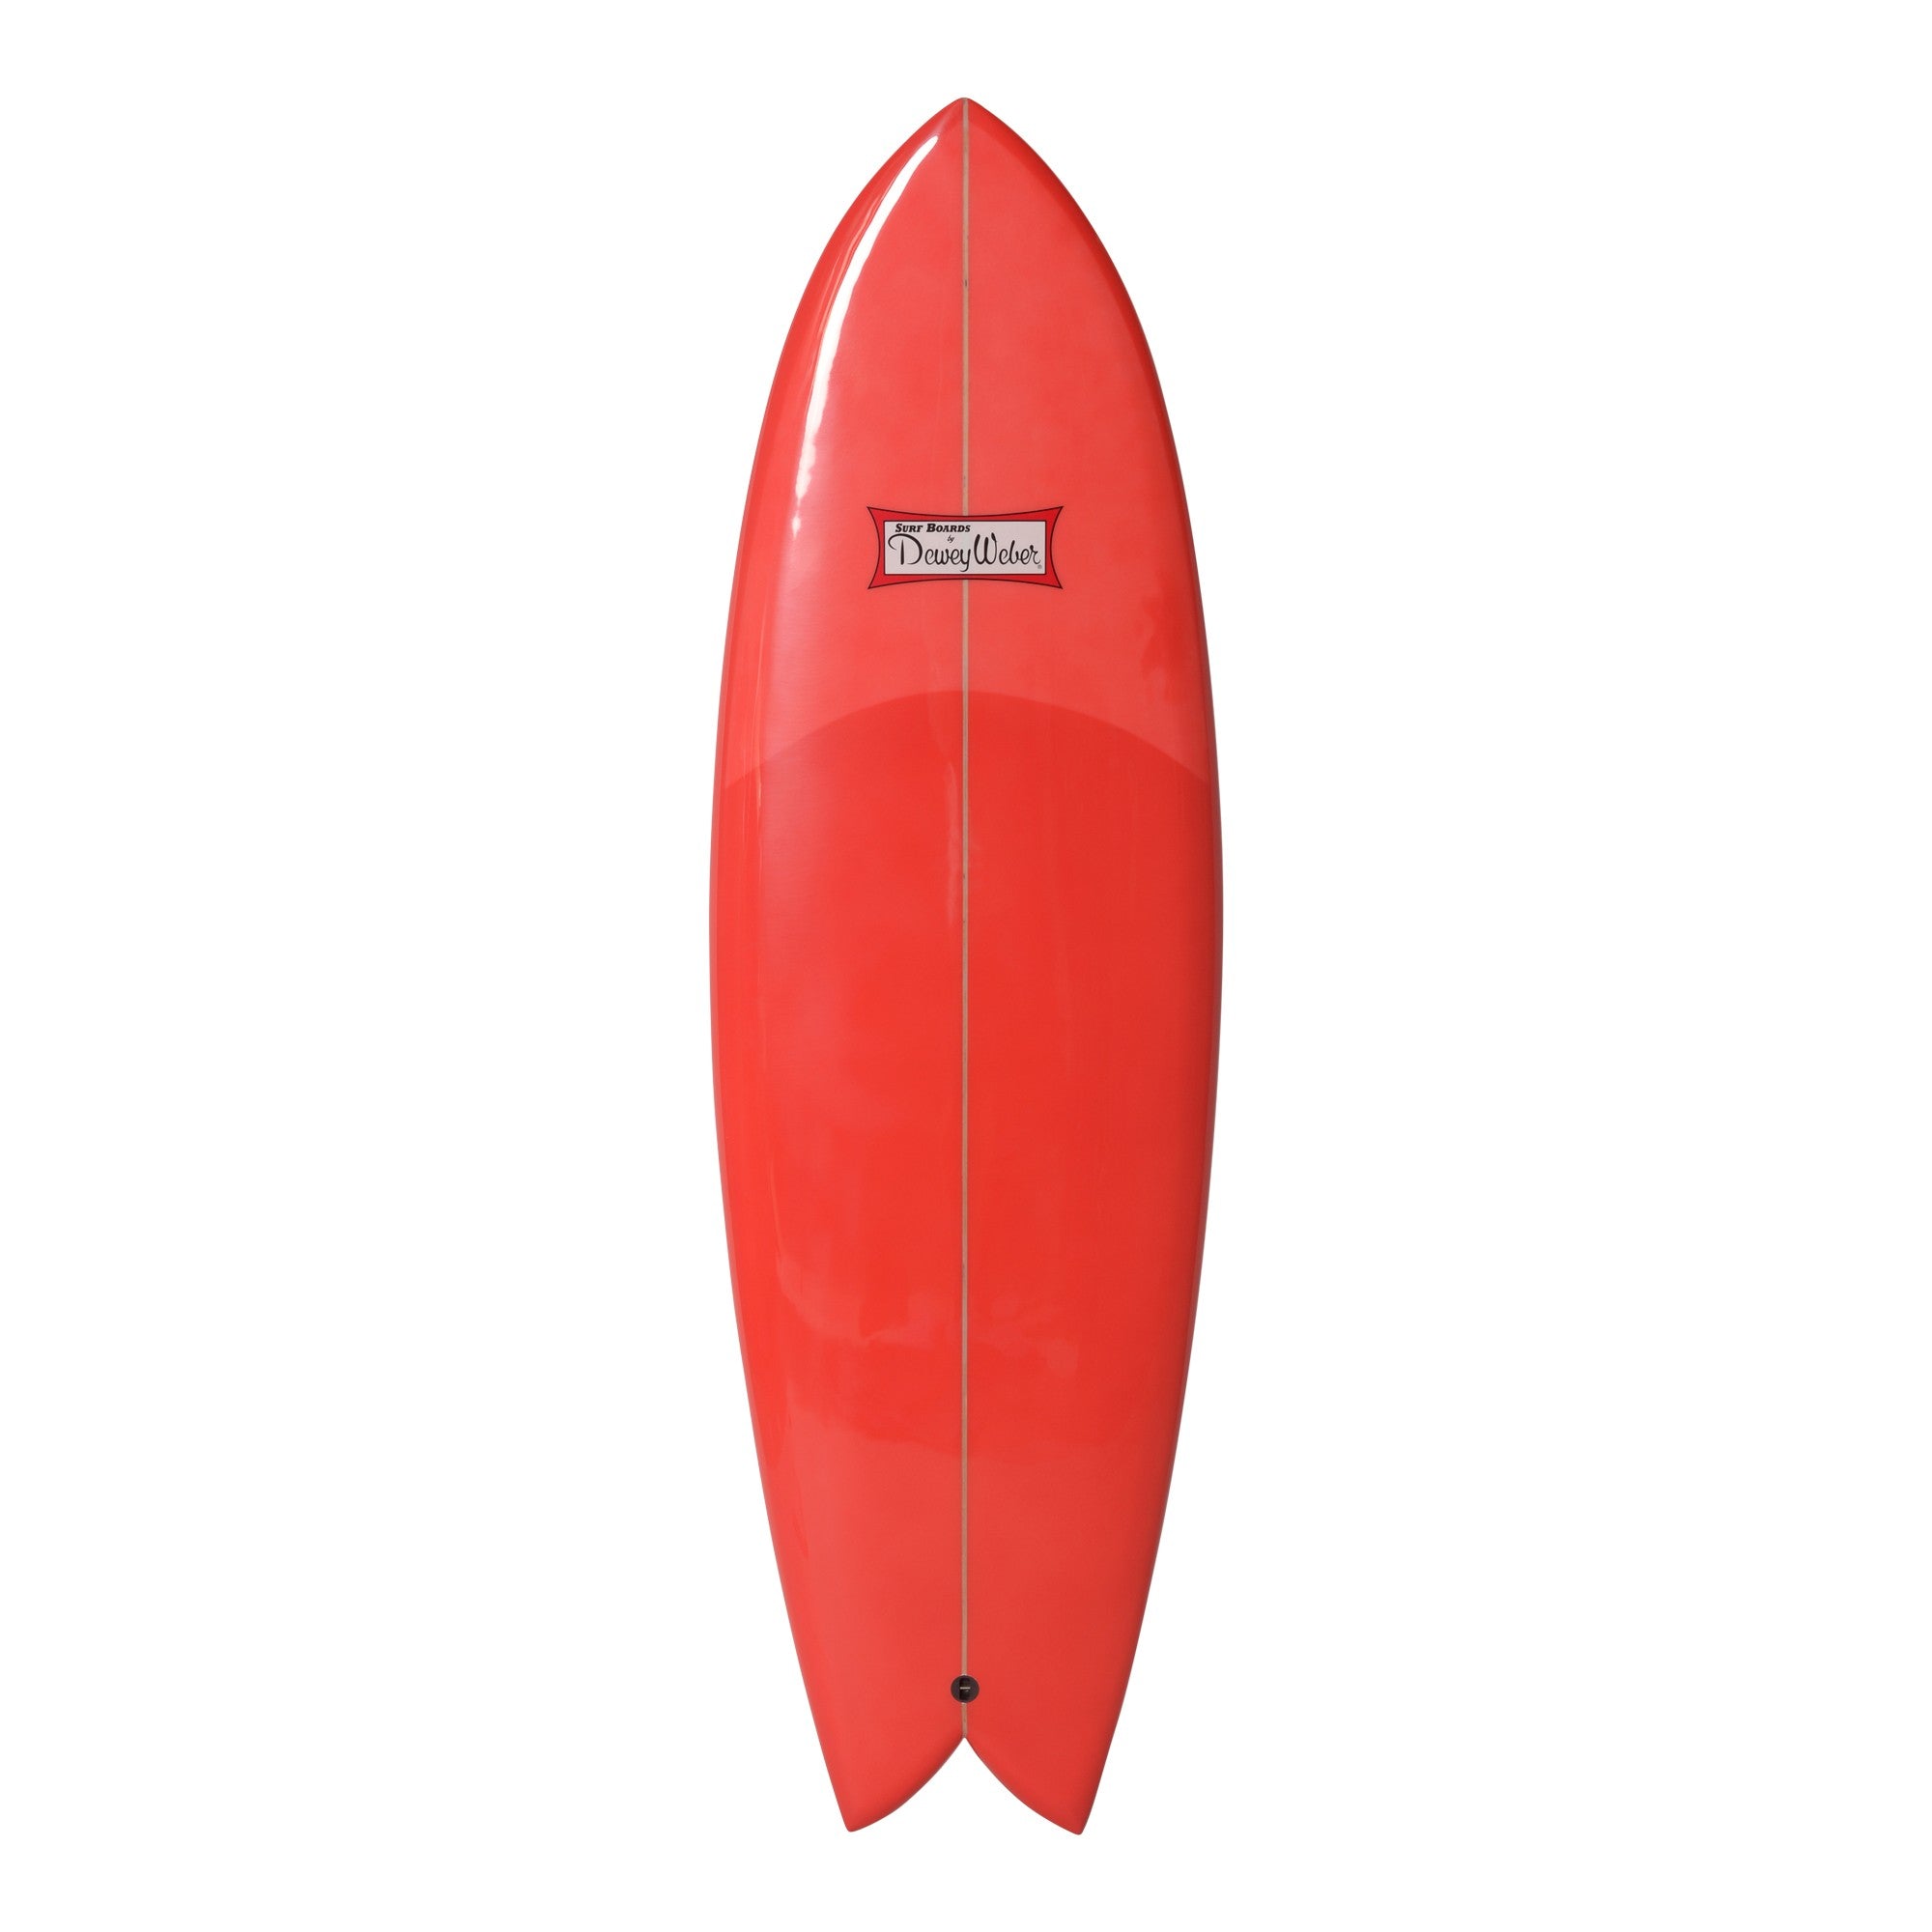 WEBER SURFBOARDS - Swish 5'9 - Red